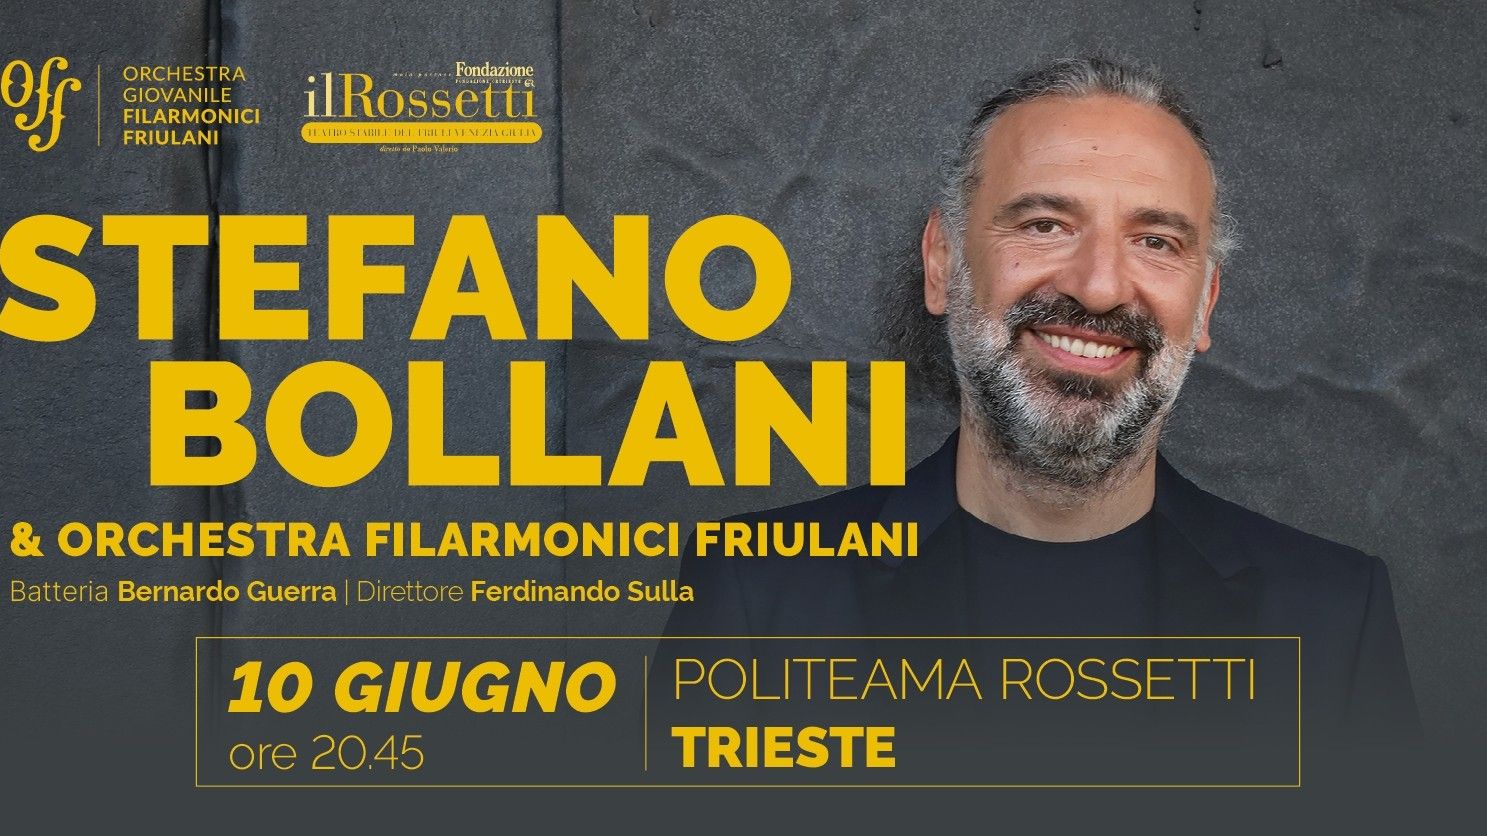 Stefano Bollani & Orchestra Filarmonici Friulani